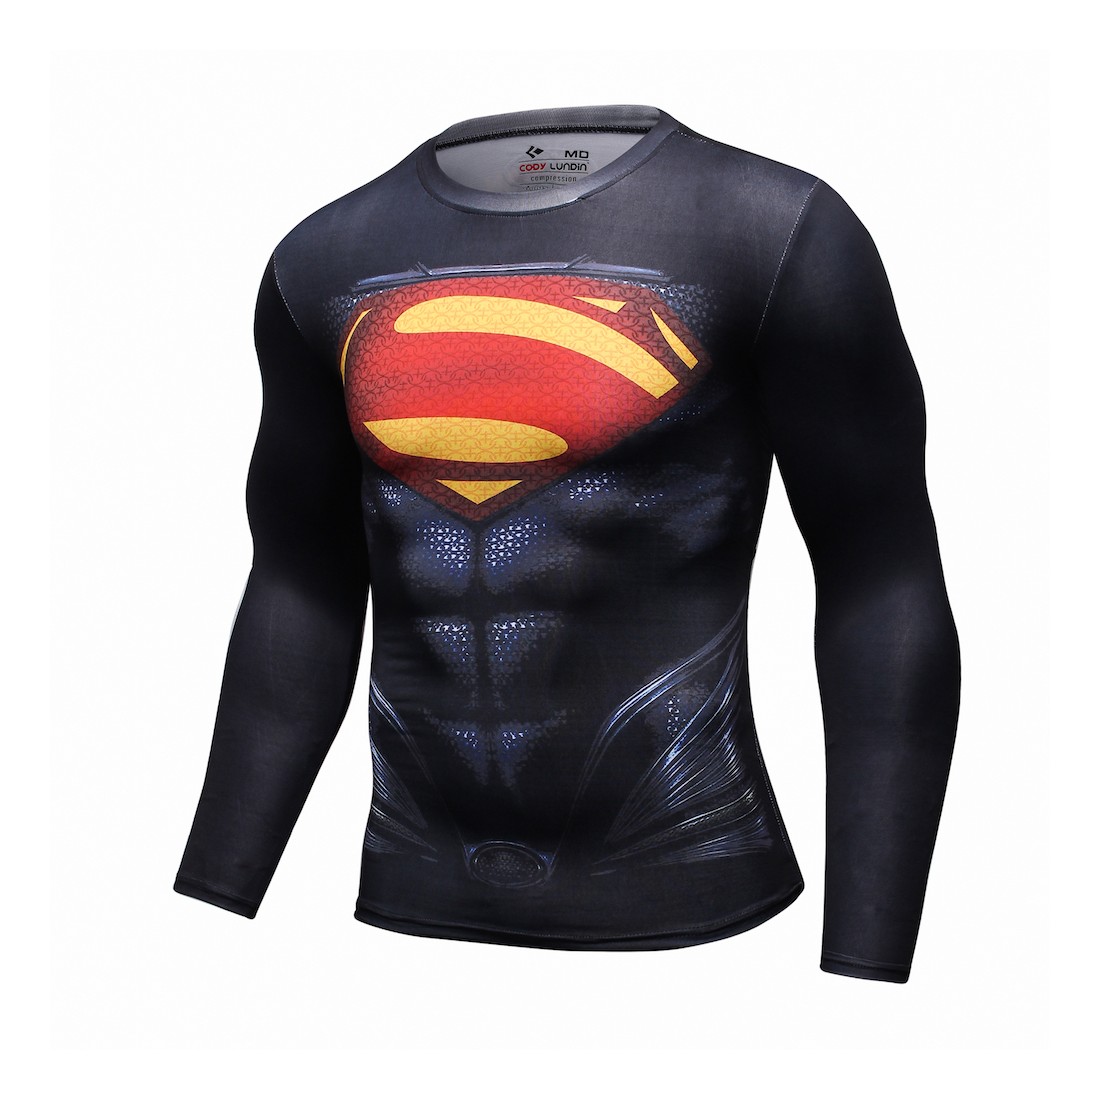 Camiseta de Compresión Hombre Superhero Superman negro rojo, manga larga